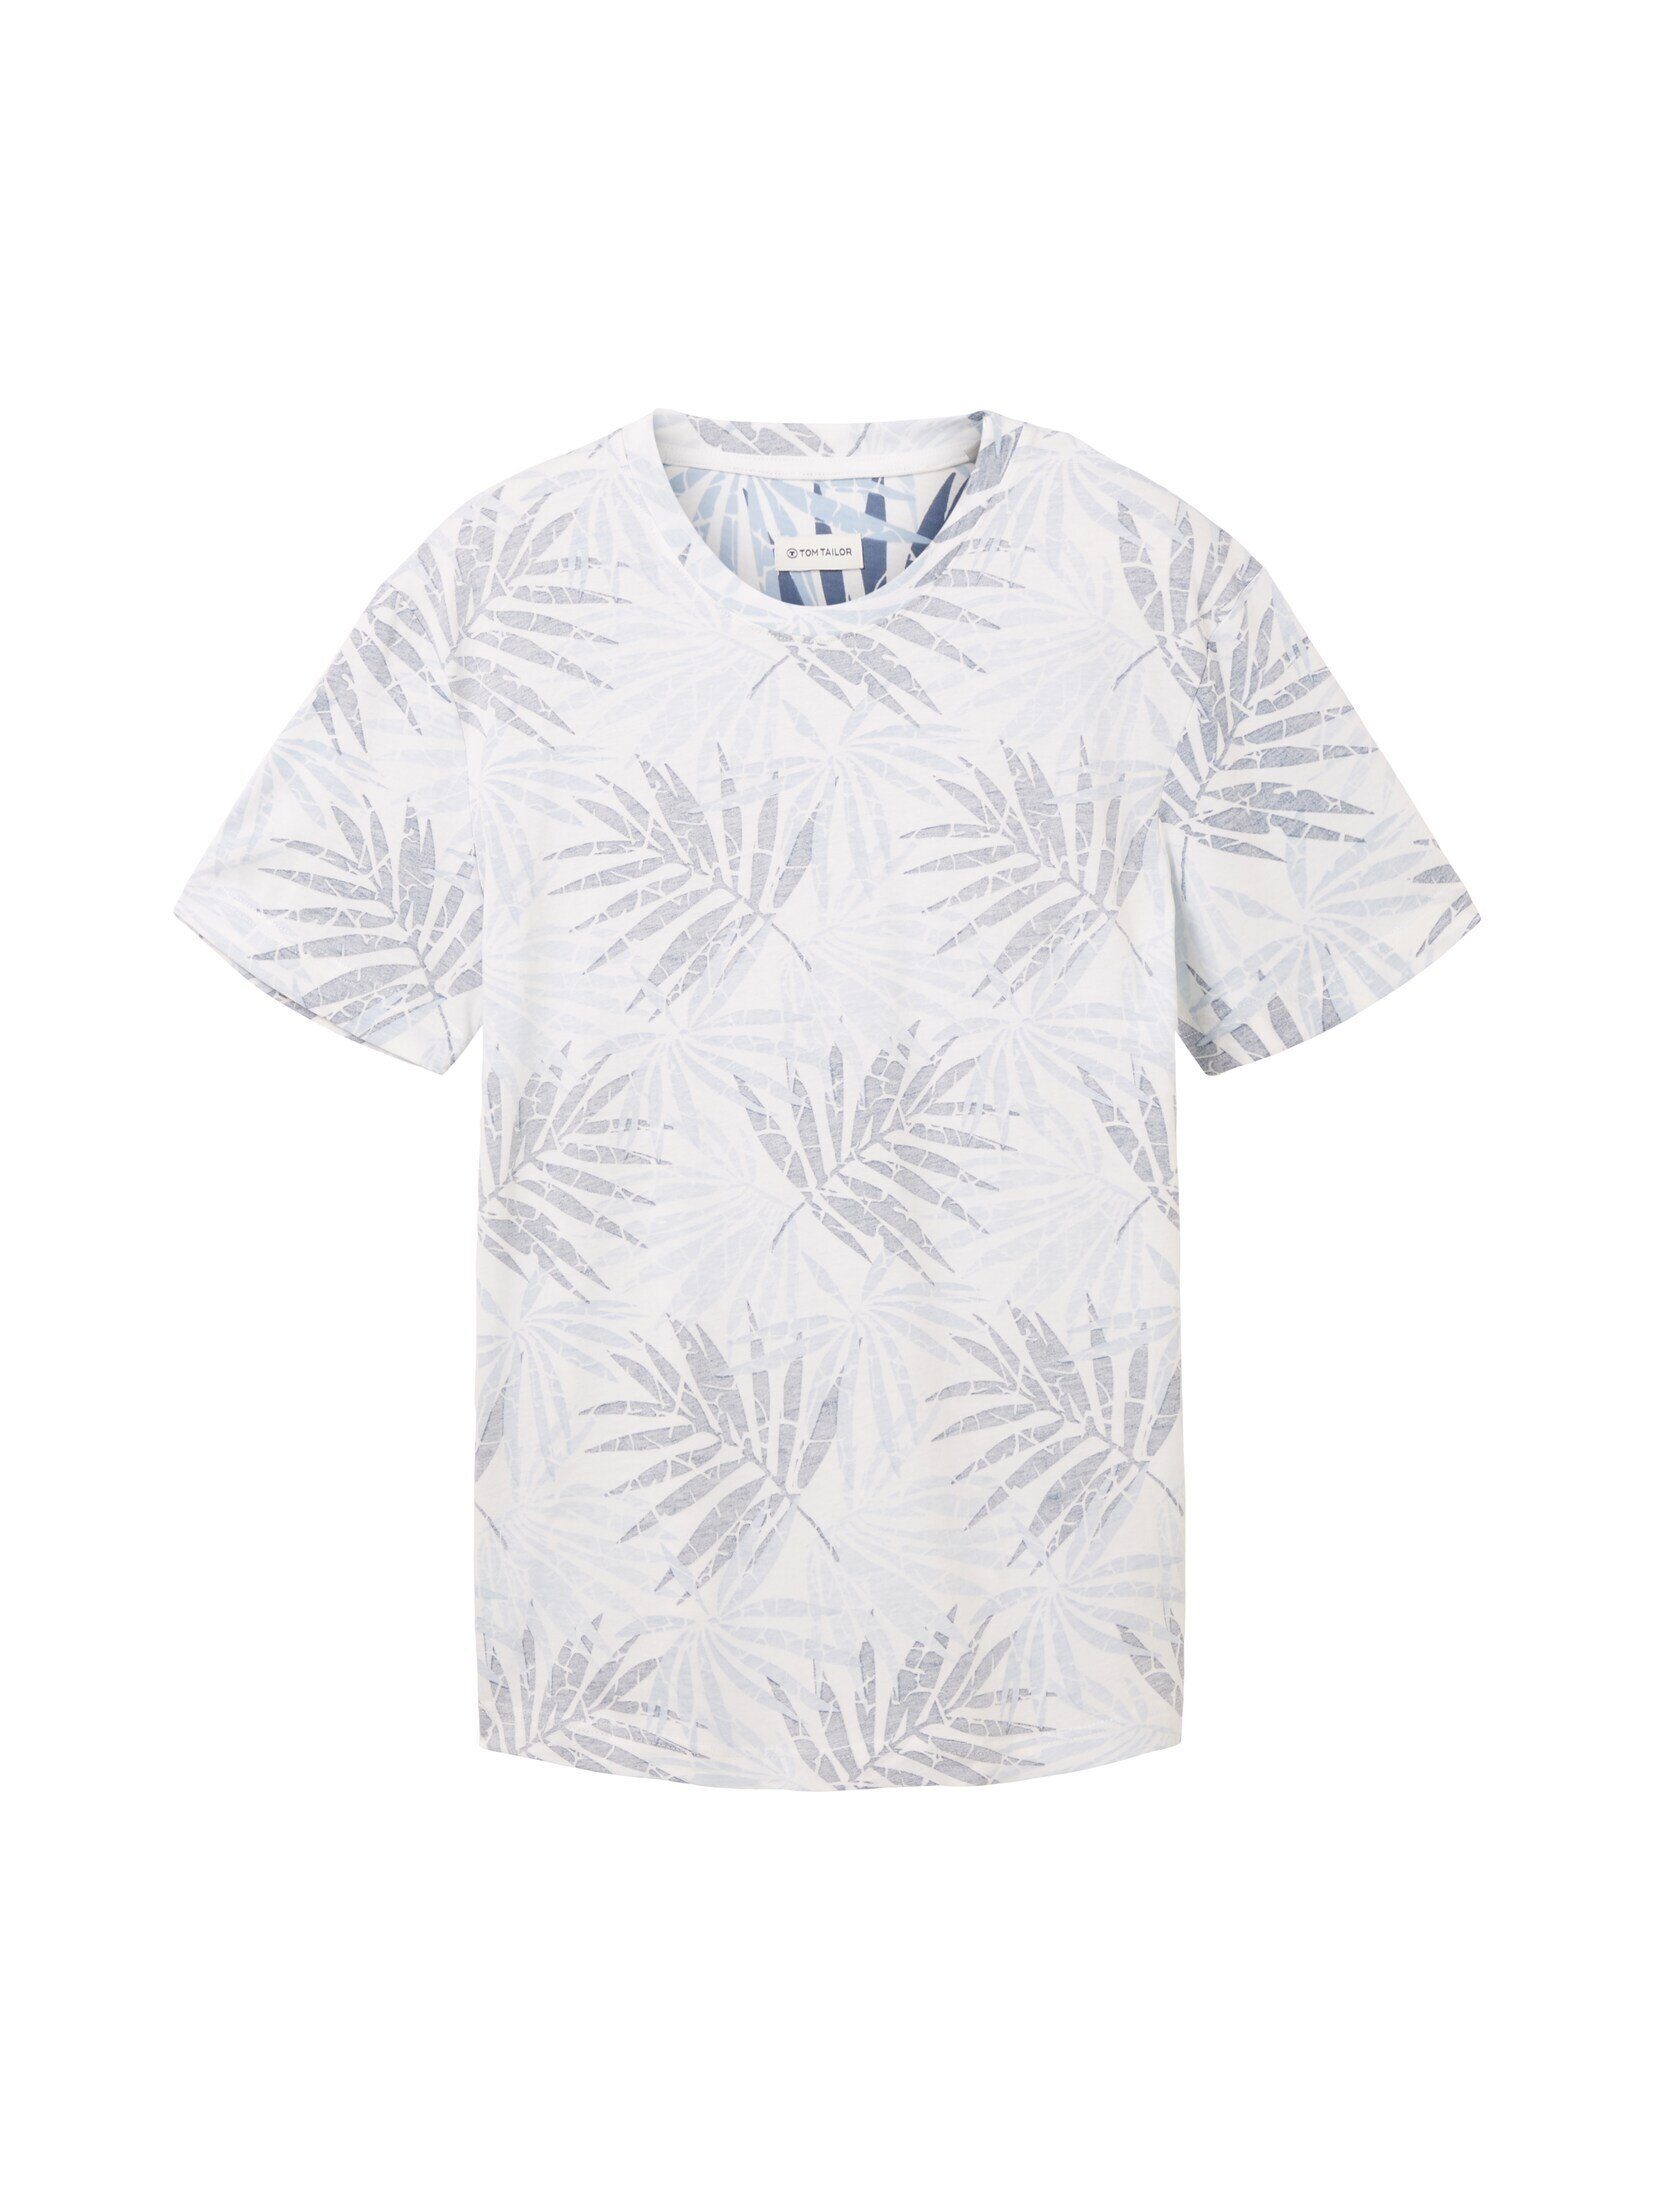 TOM TAILOR T-Shirt T-Shirt leaf tonal mit Allover-Print blue light design